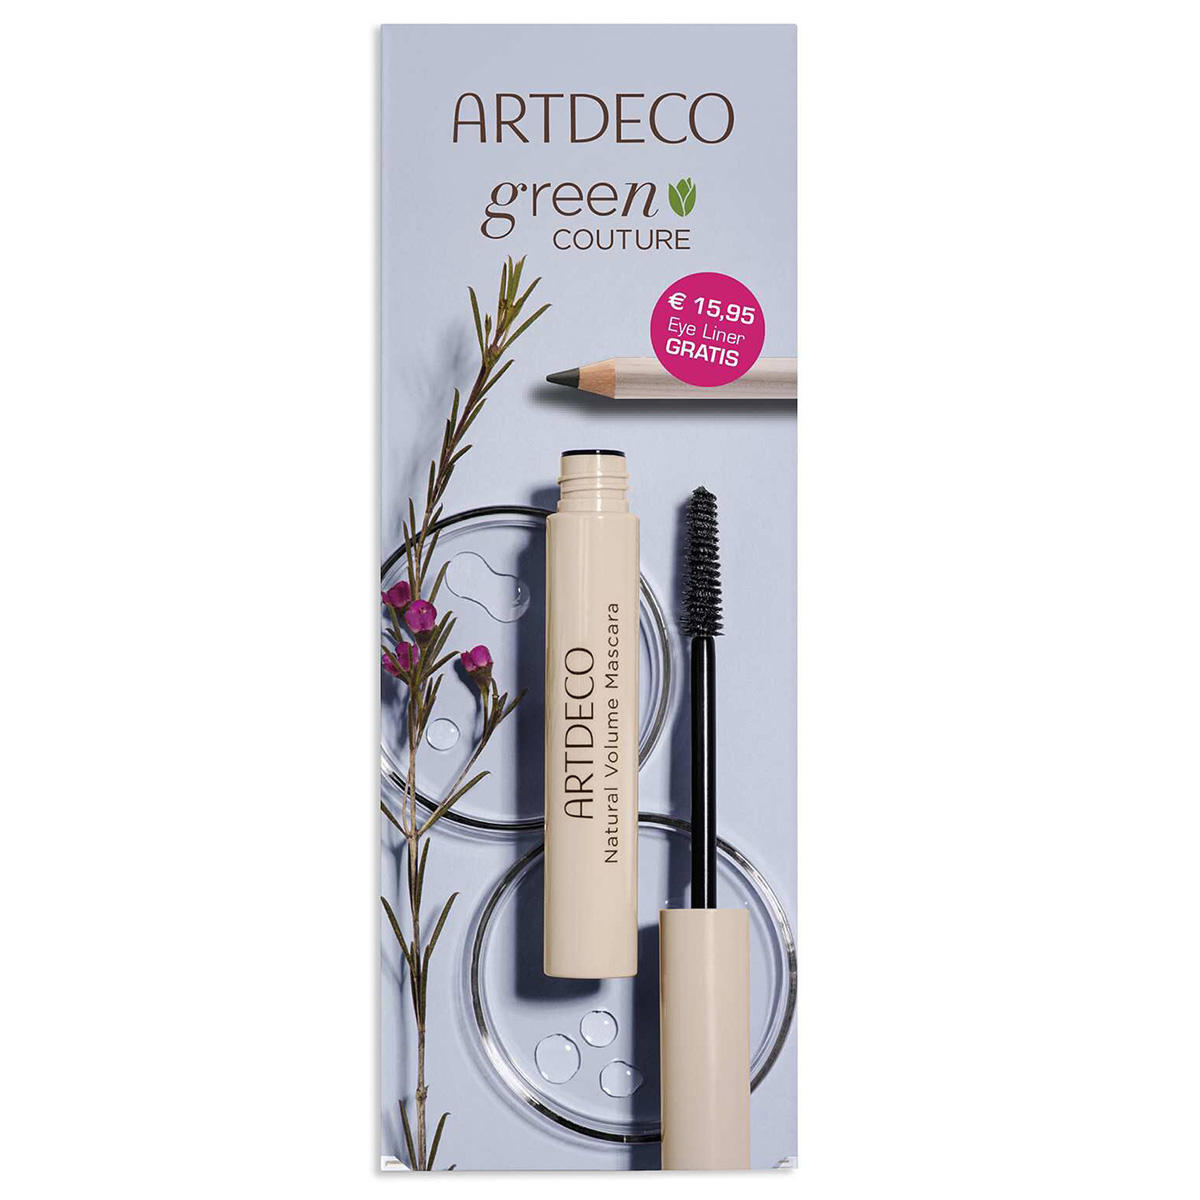 ARTDECO Green Couture Natural Volume Mascara & Smooth Eyeliner Set  - 1